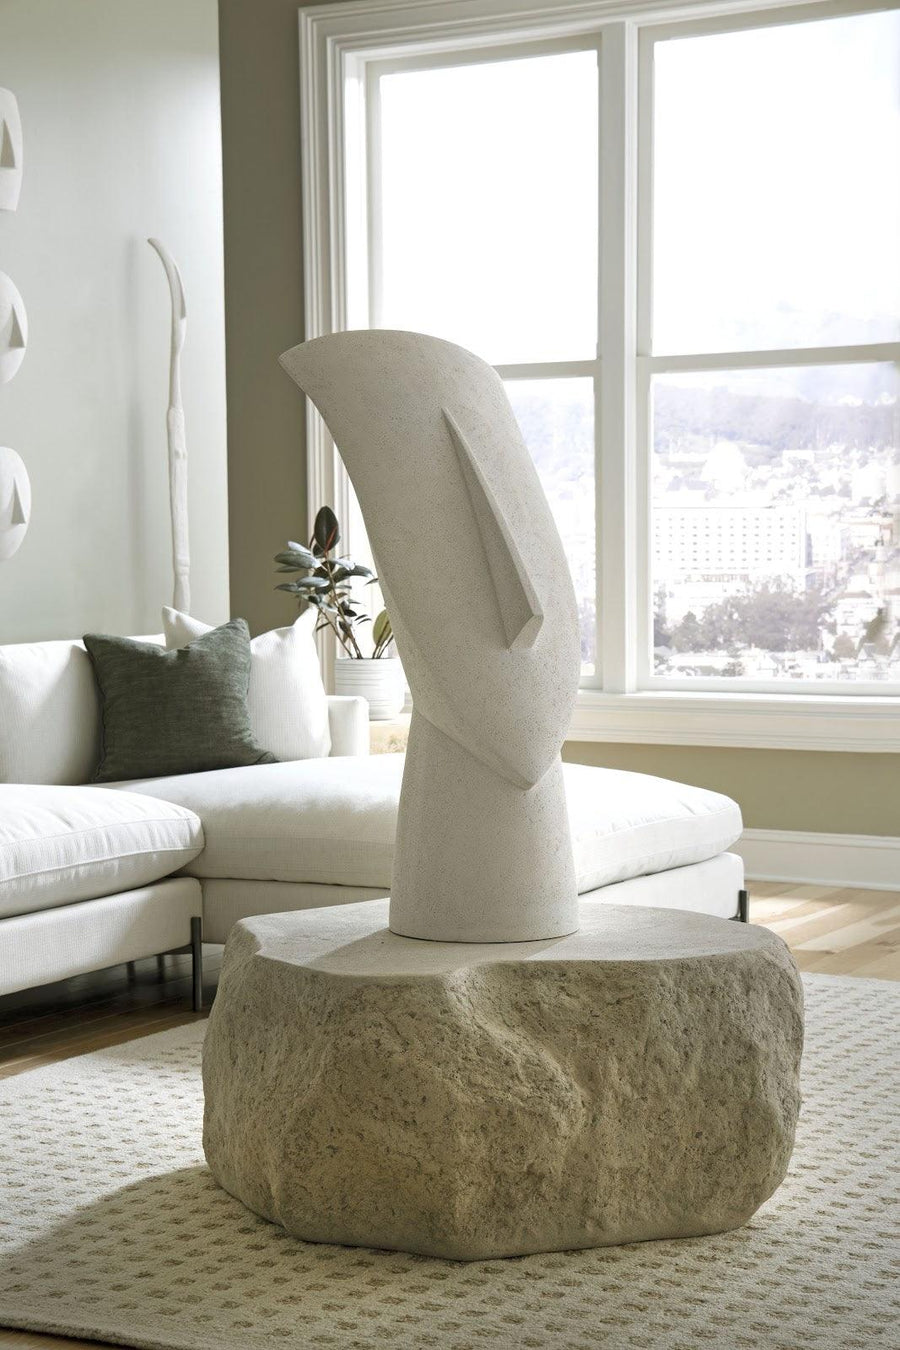 Cycladic Head, Sculpture, Classic White Stone - Maison Vogue